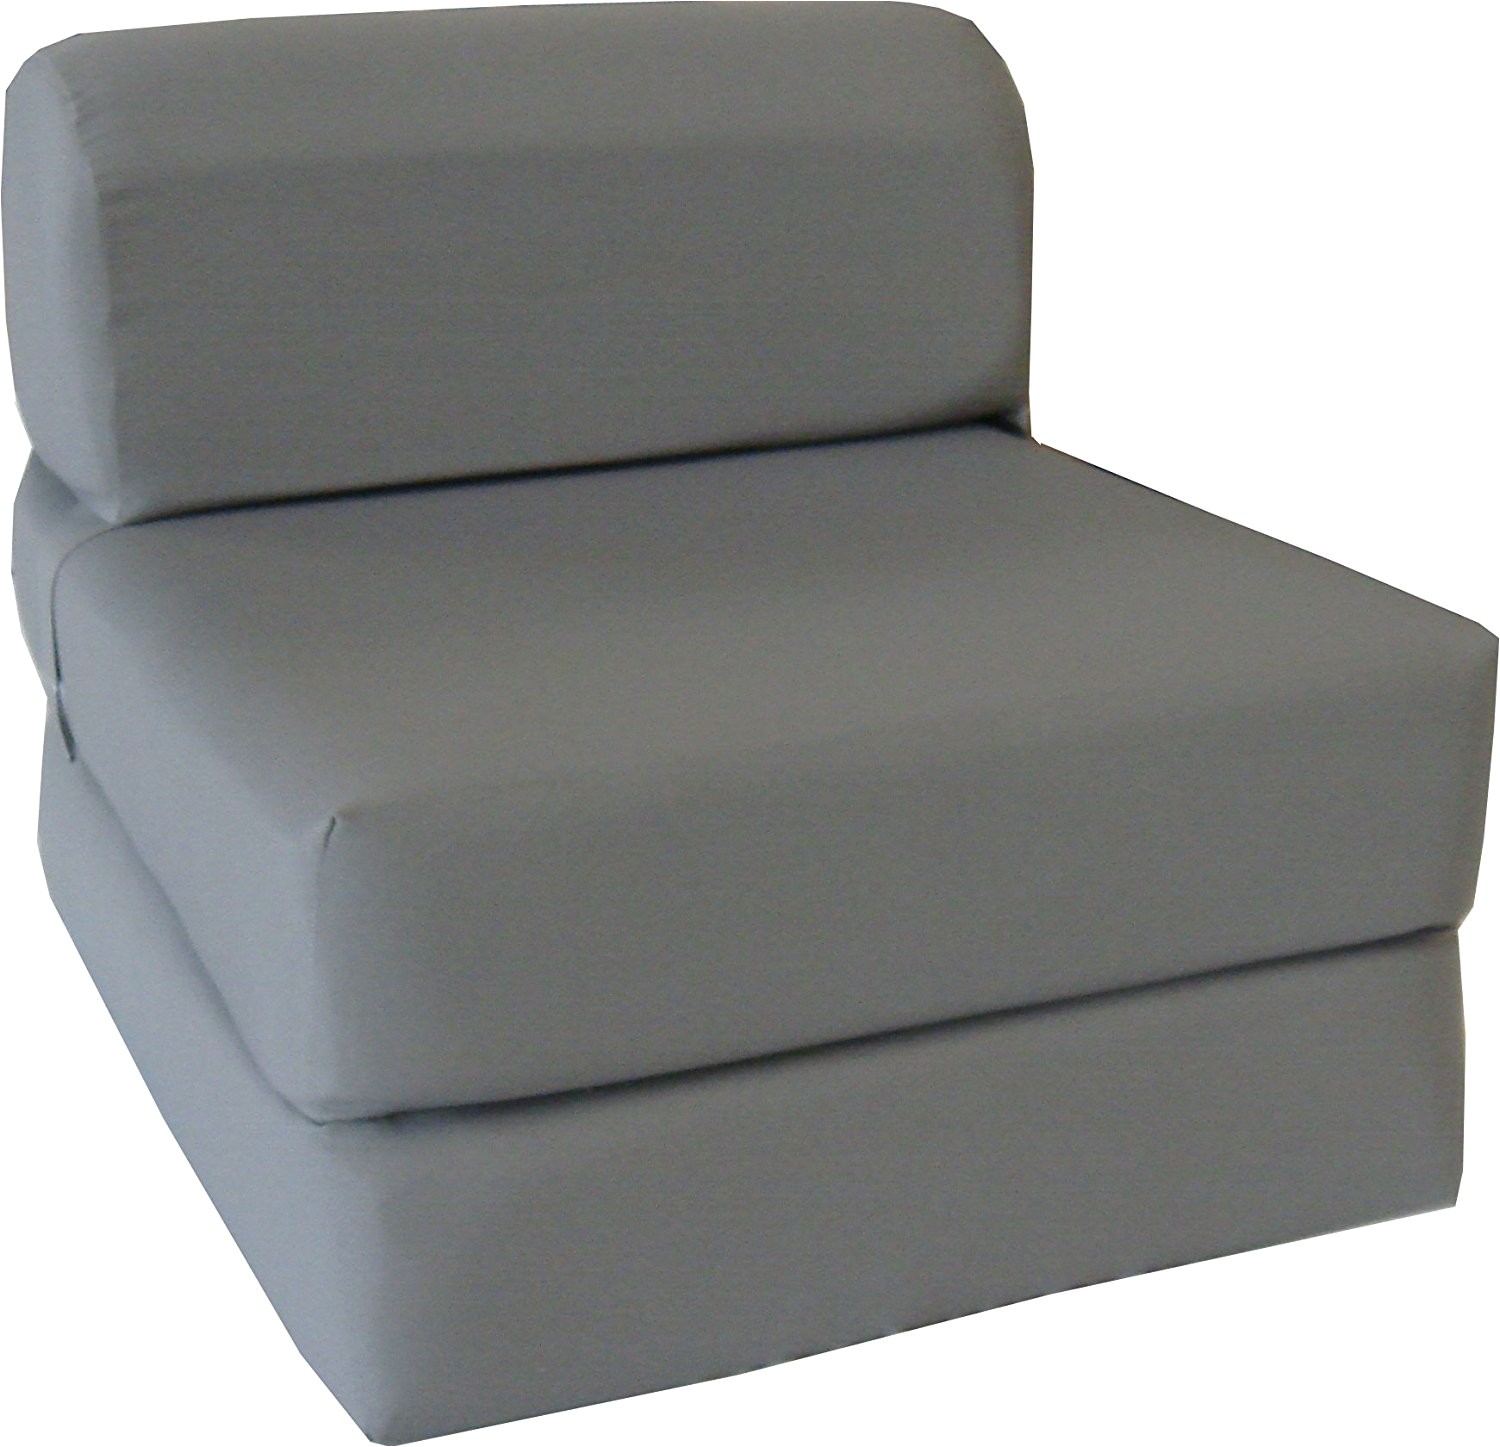 Sleeper Chairs Amazon Amazon Com Gray Sleeper Chair Folding Foam Bed Sized 6 Thick X 32